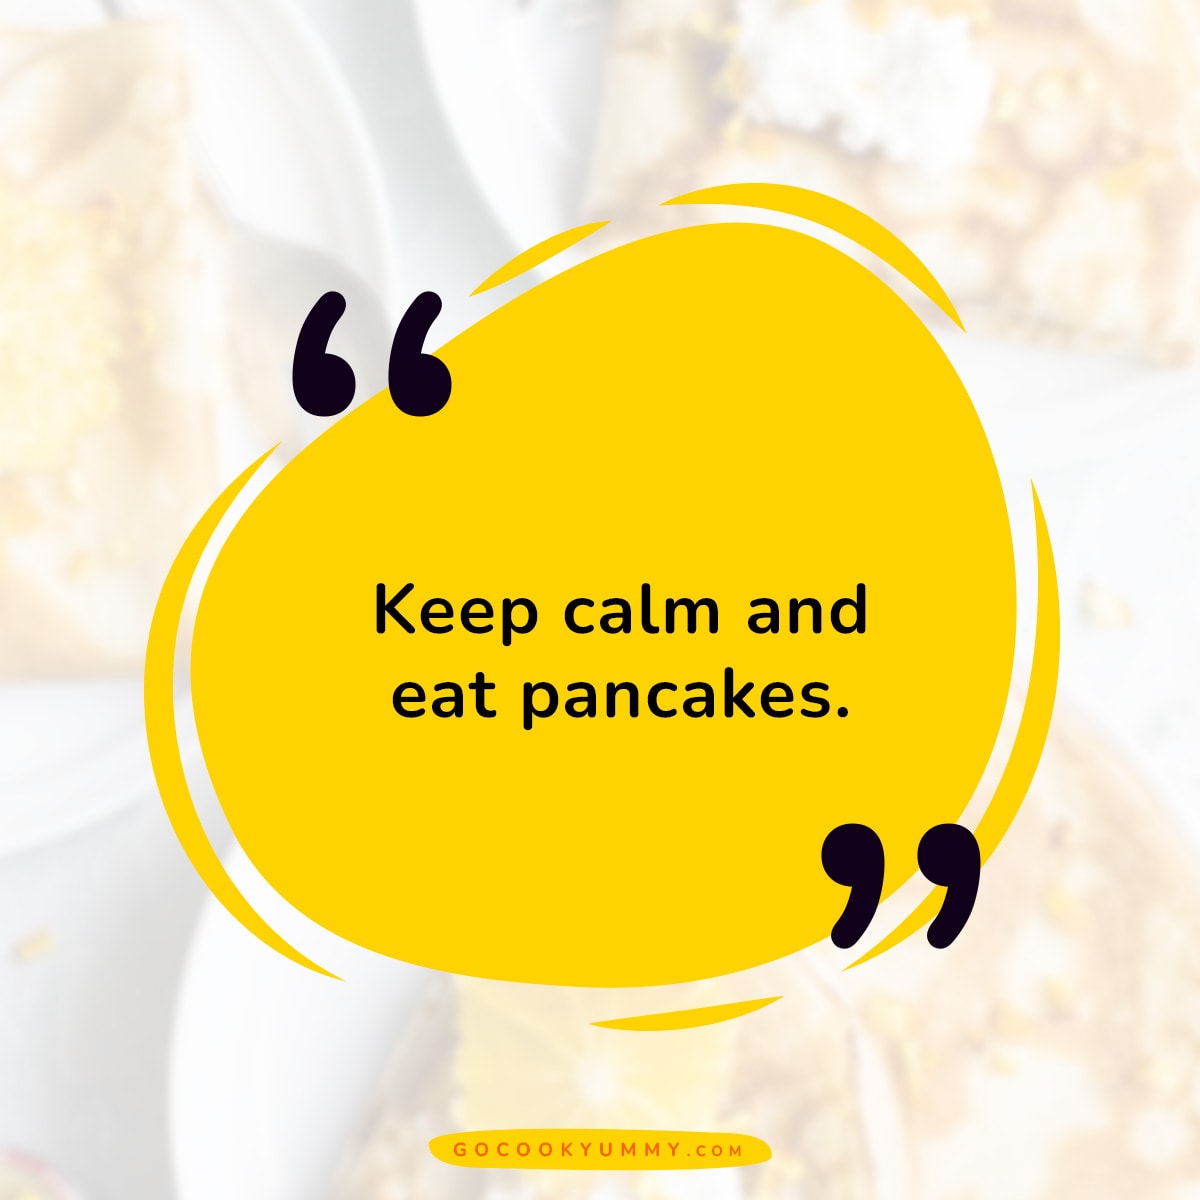 Keep calm and eat pancakes.